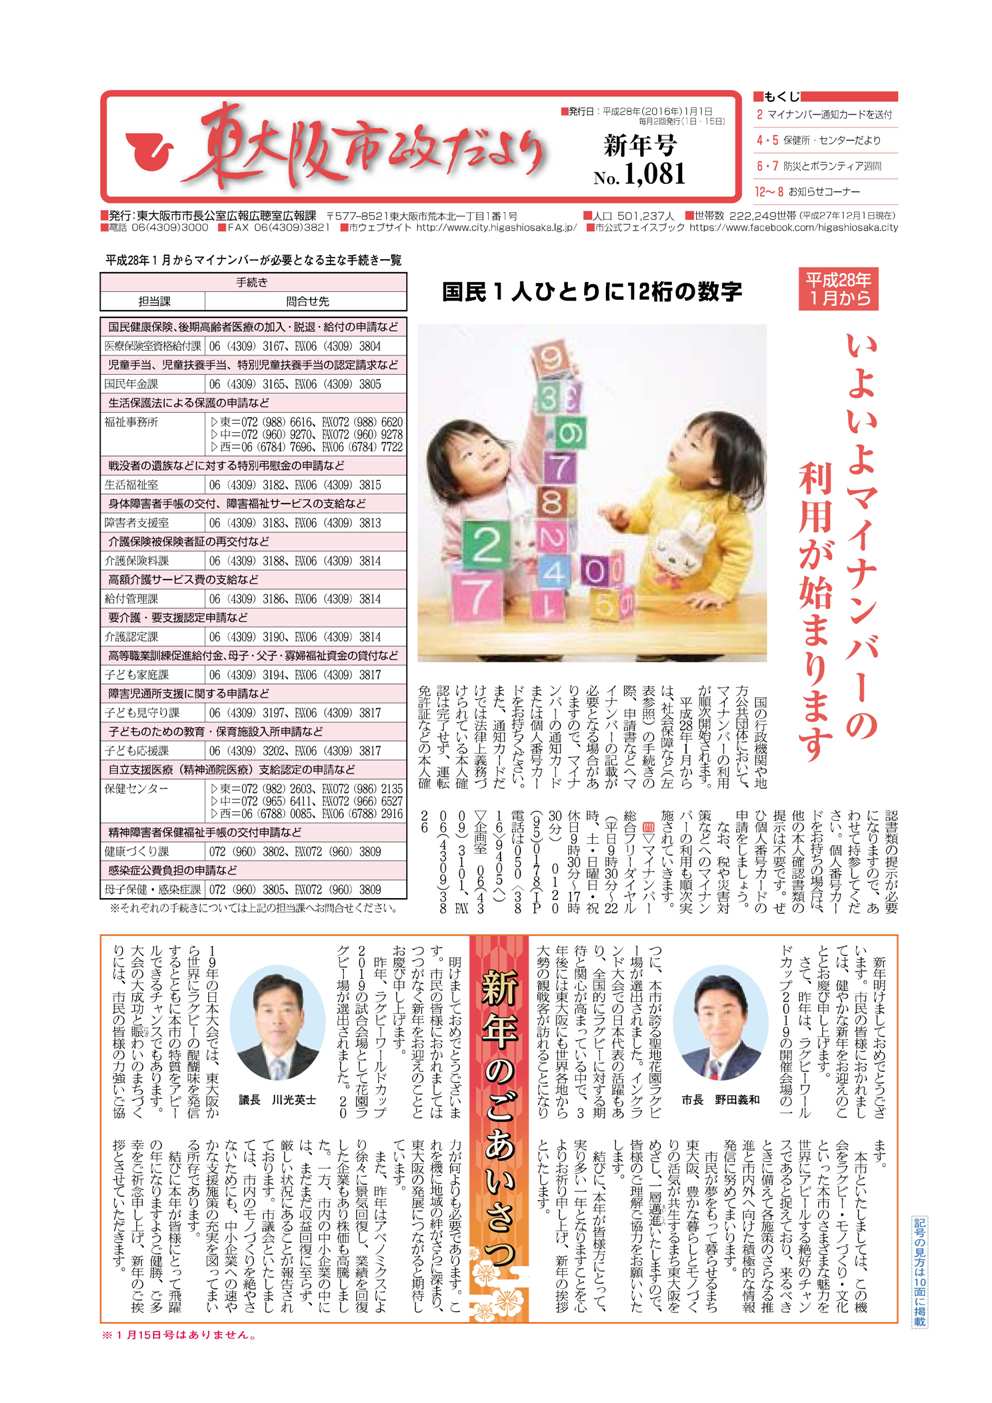 平成28年(2016年)新年号の表紙